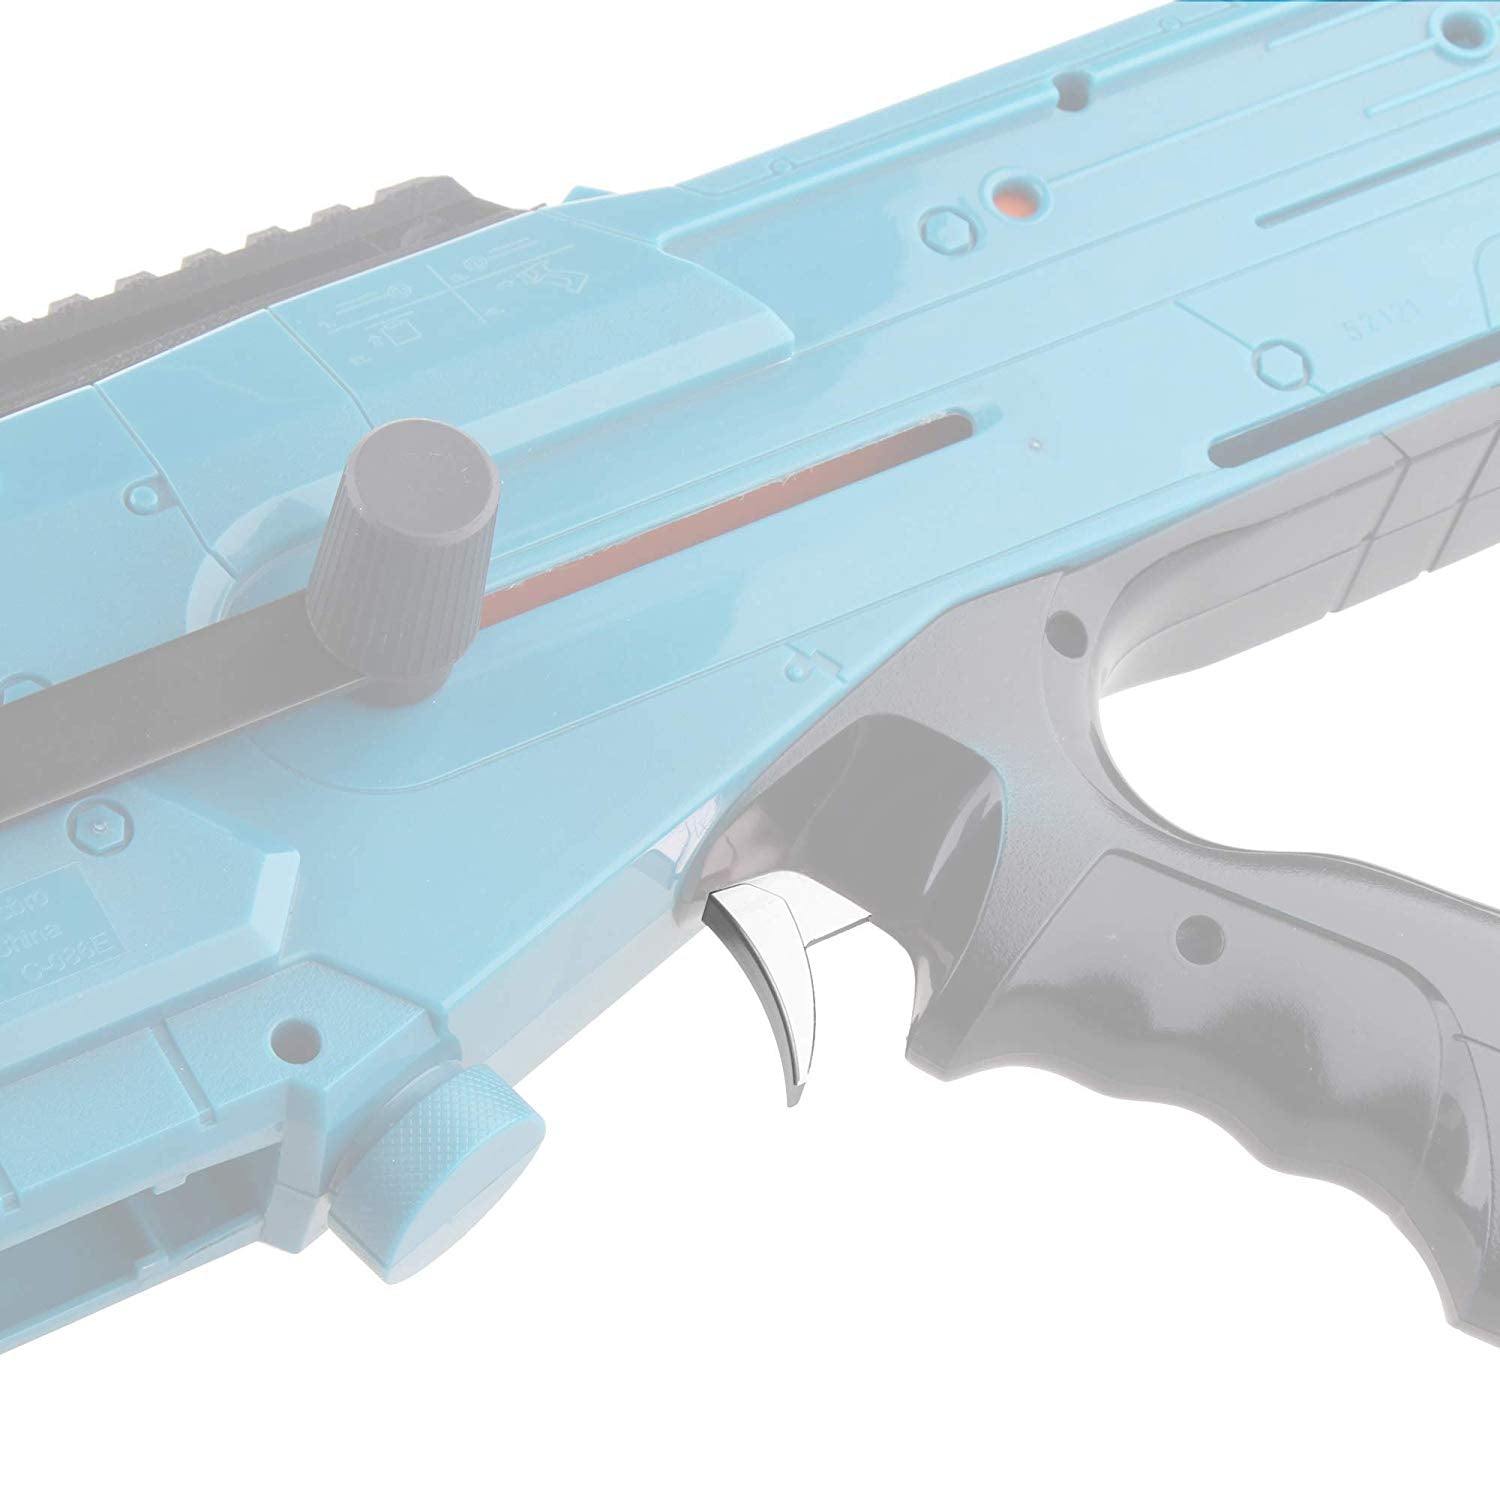 Nerf N-Strike LongStrike CS-6 Sniper Rifle Blue w/ Sight Looks